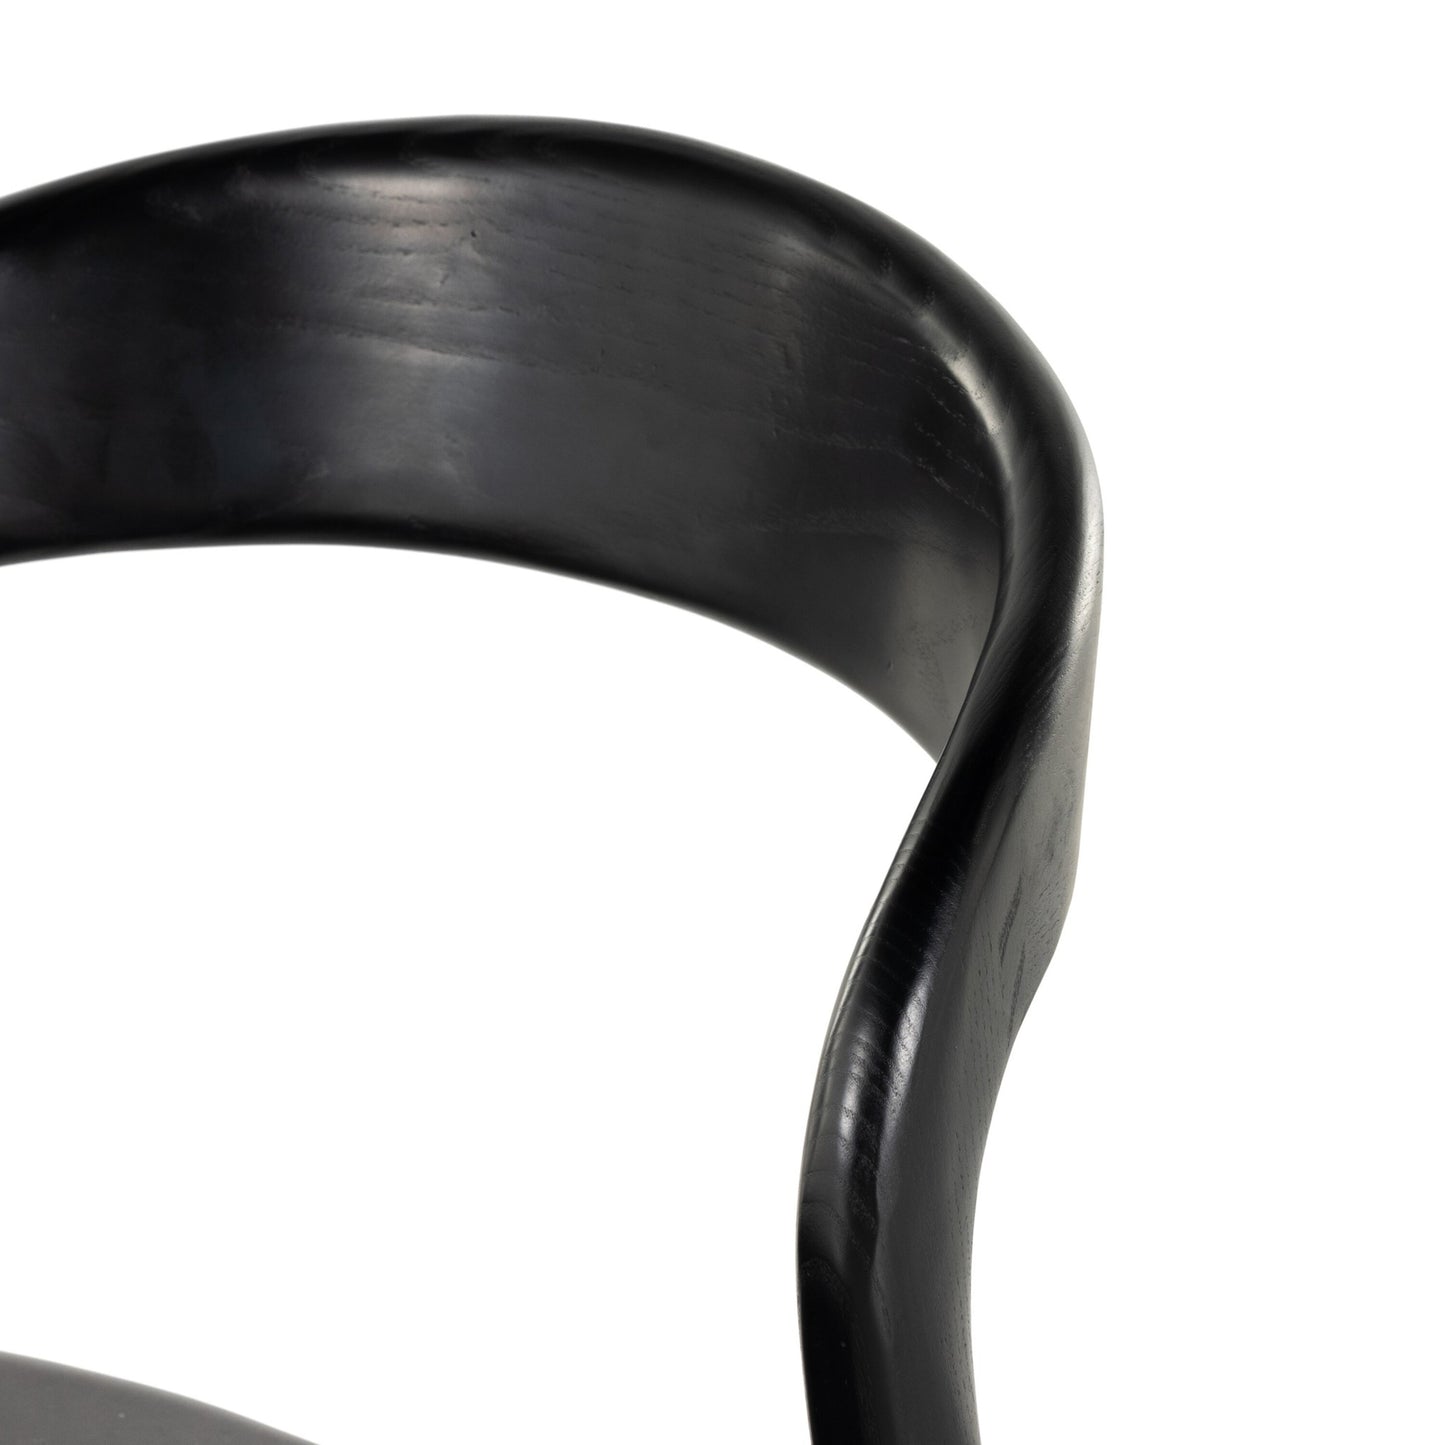 Amare dining chair-sonoma black